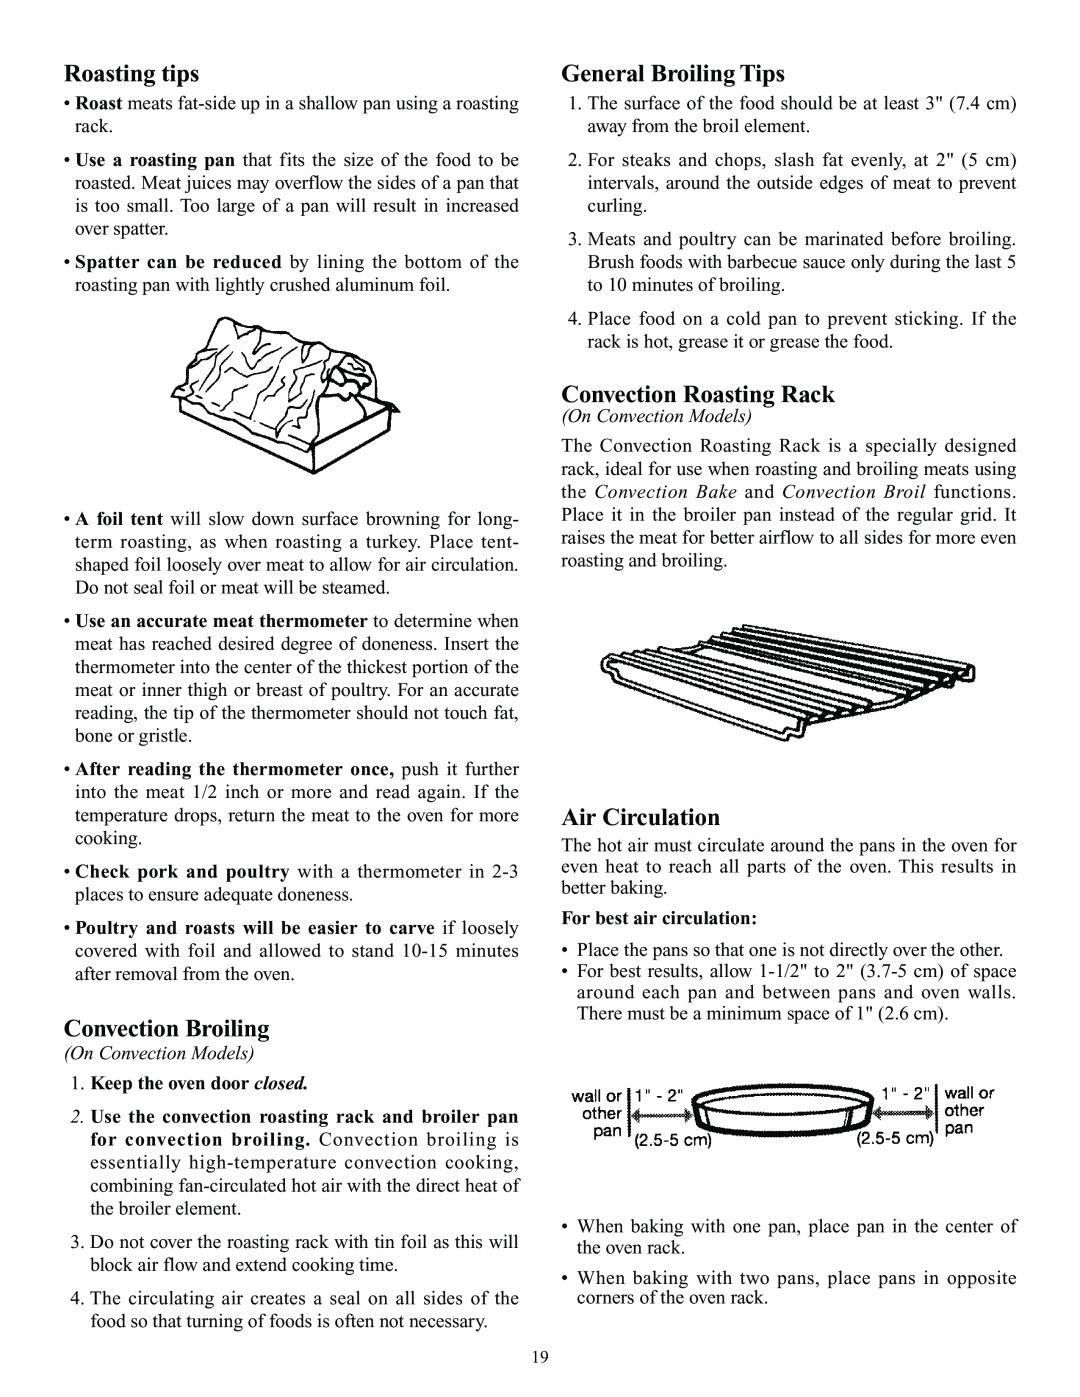 Elmira Stove Works 1954 manual Roasting tips, Convection Broiling, General Broiling Tips, Convection Roasting Rack 